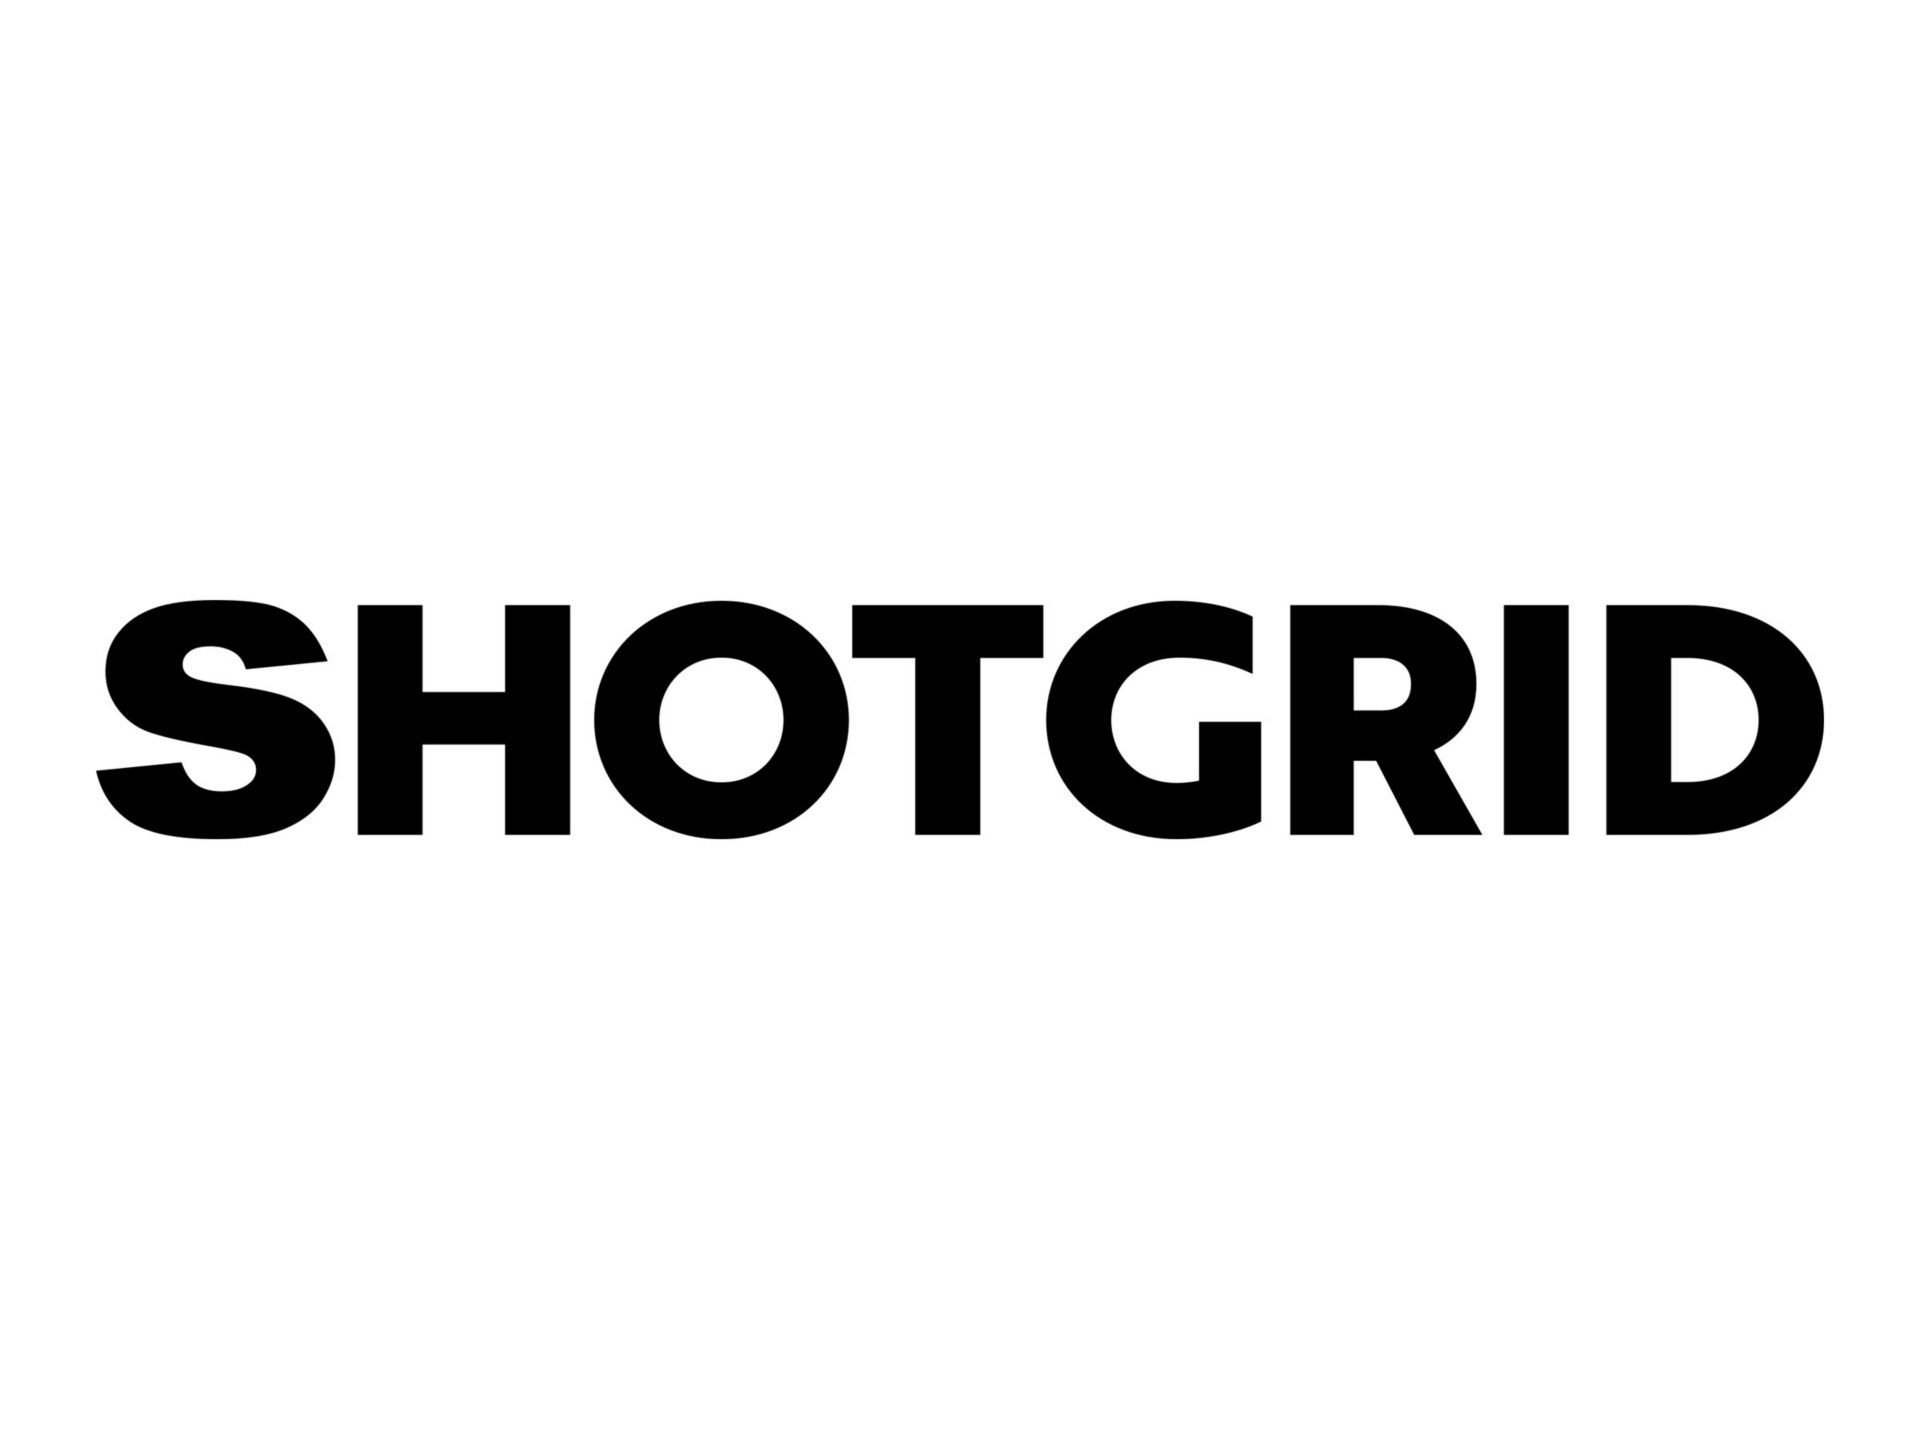 Autodesk ShotGrid - New Subscription (33 months) - 1 seat